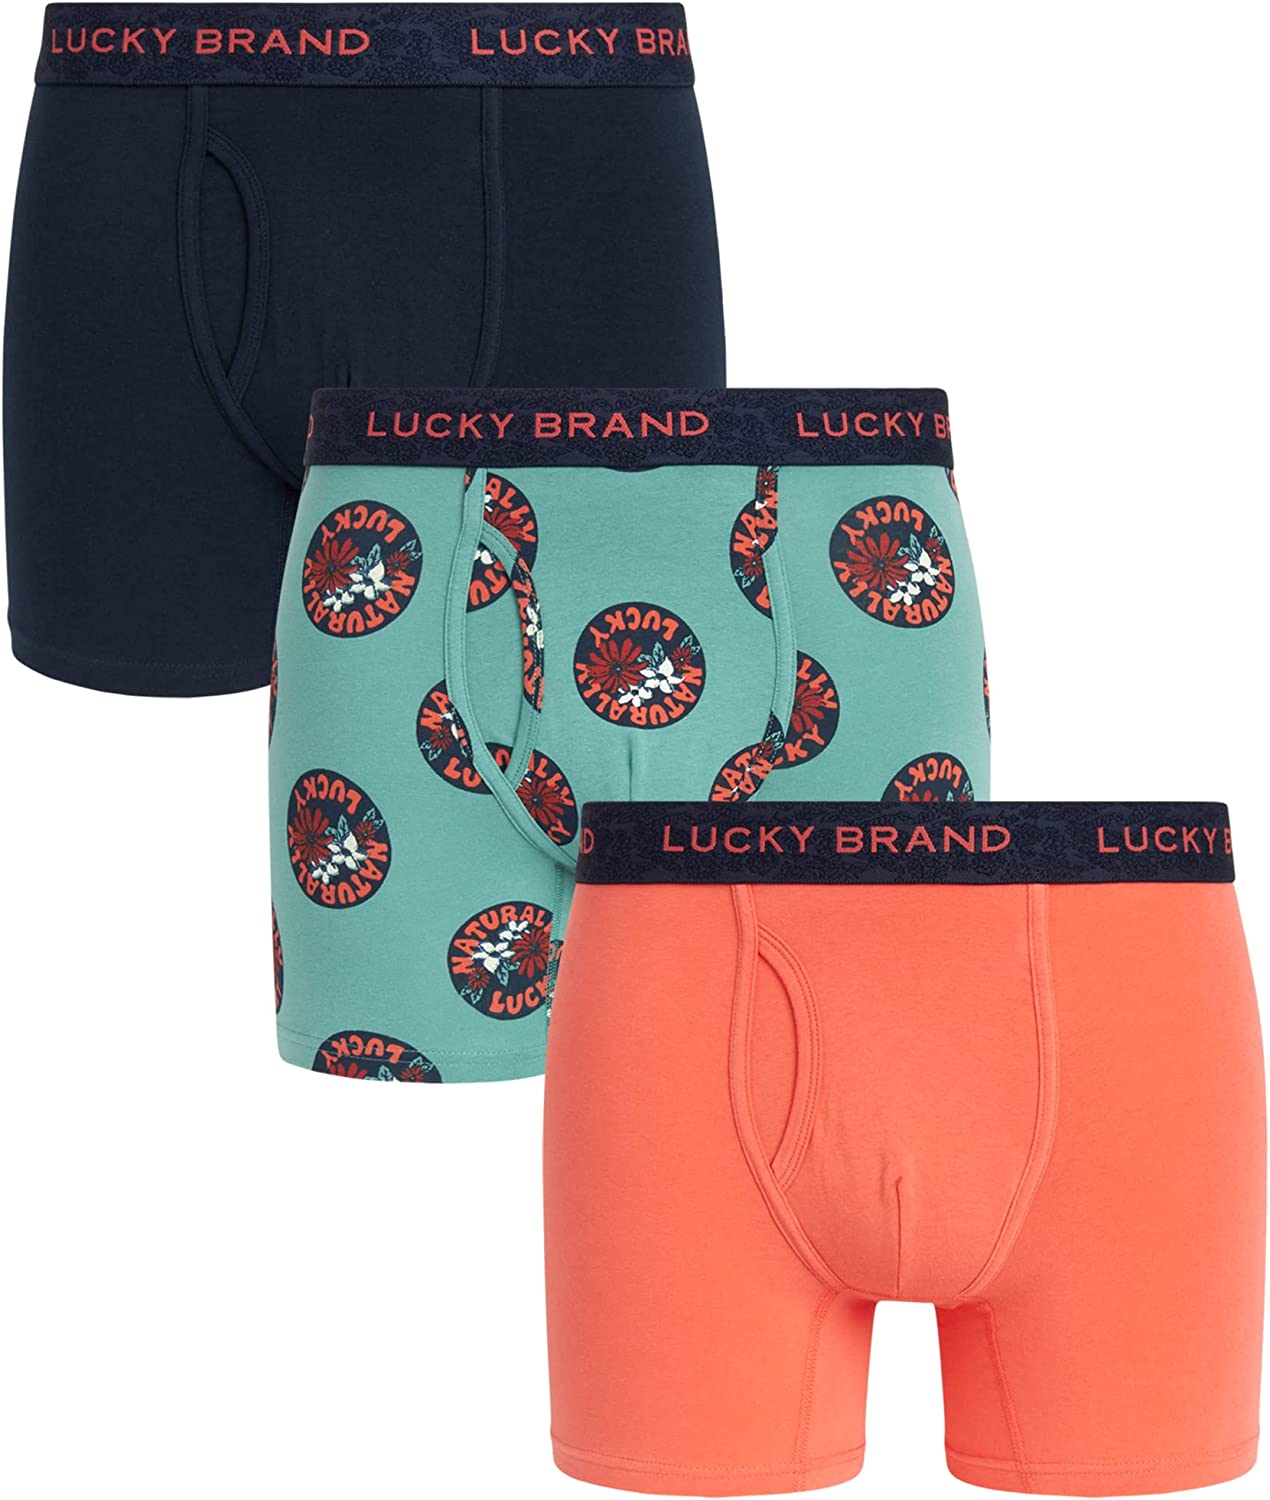 Lucky Brand Men's Underwear - Casual Stretch Boxer Briefs (3 Pack)